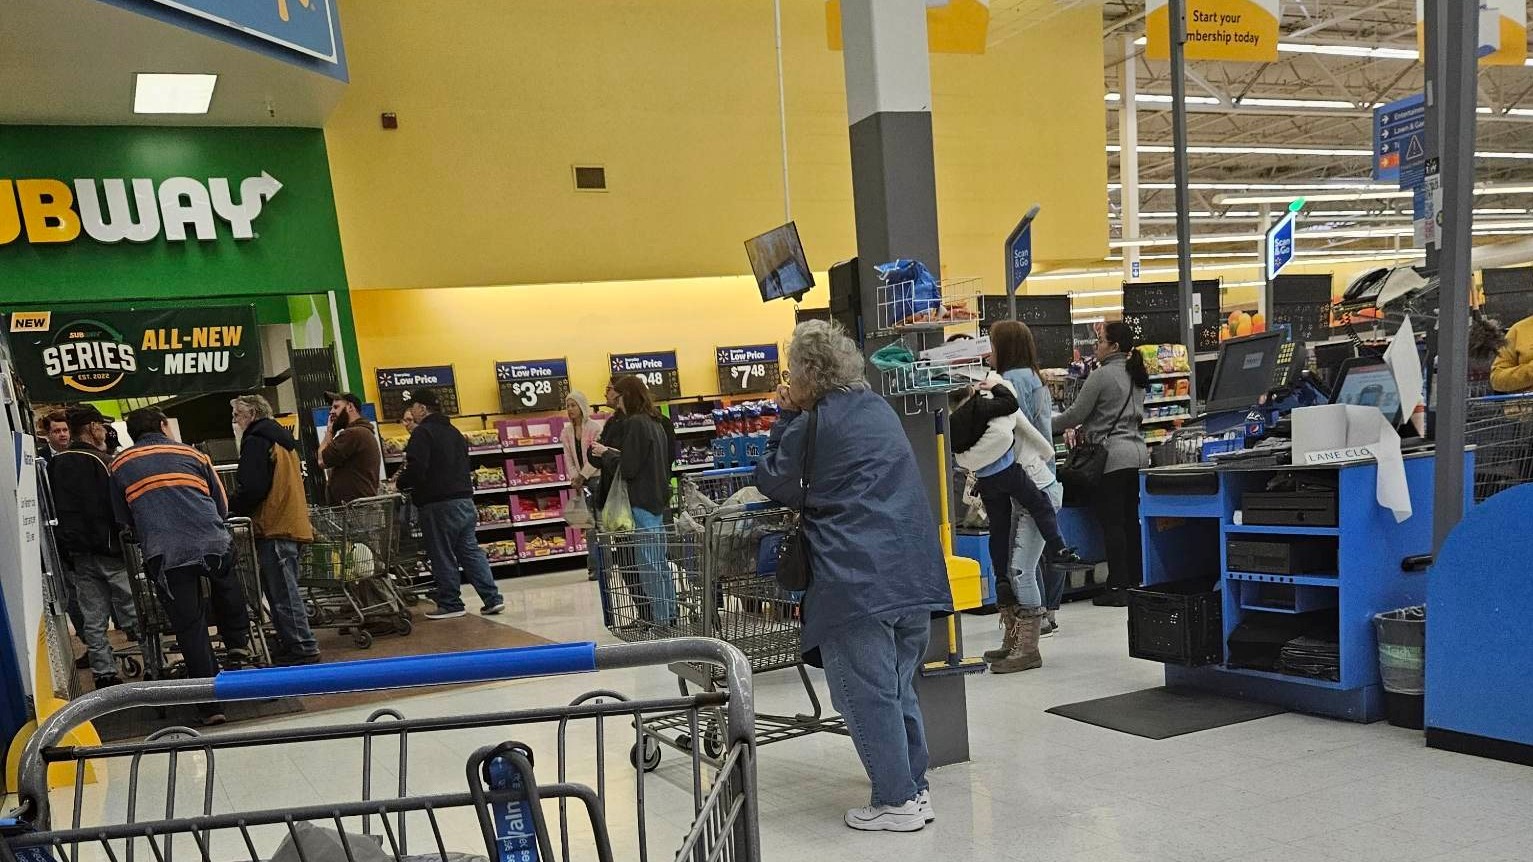 Walmart threat a hoax, police say